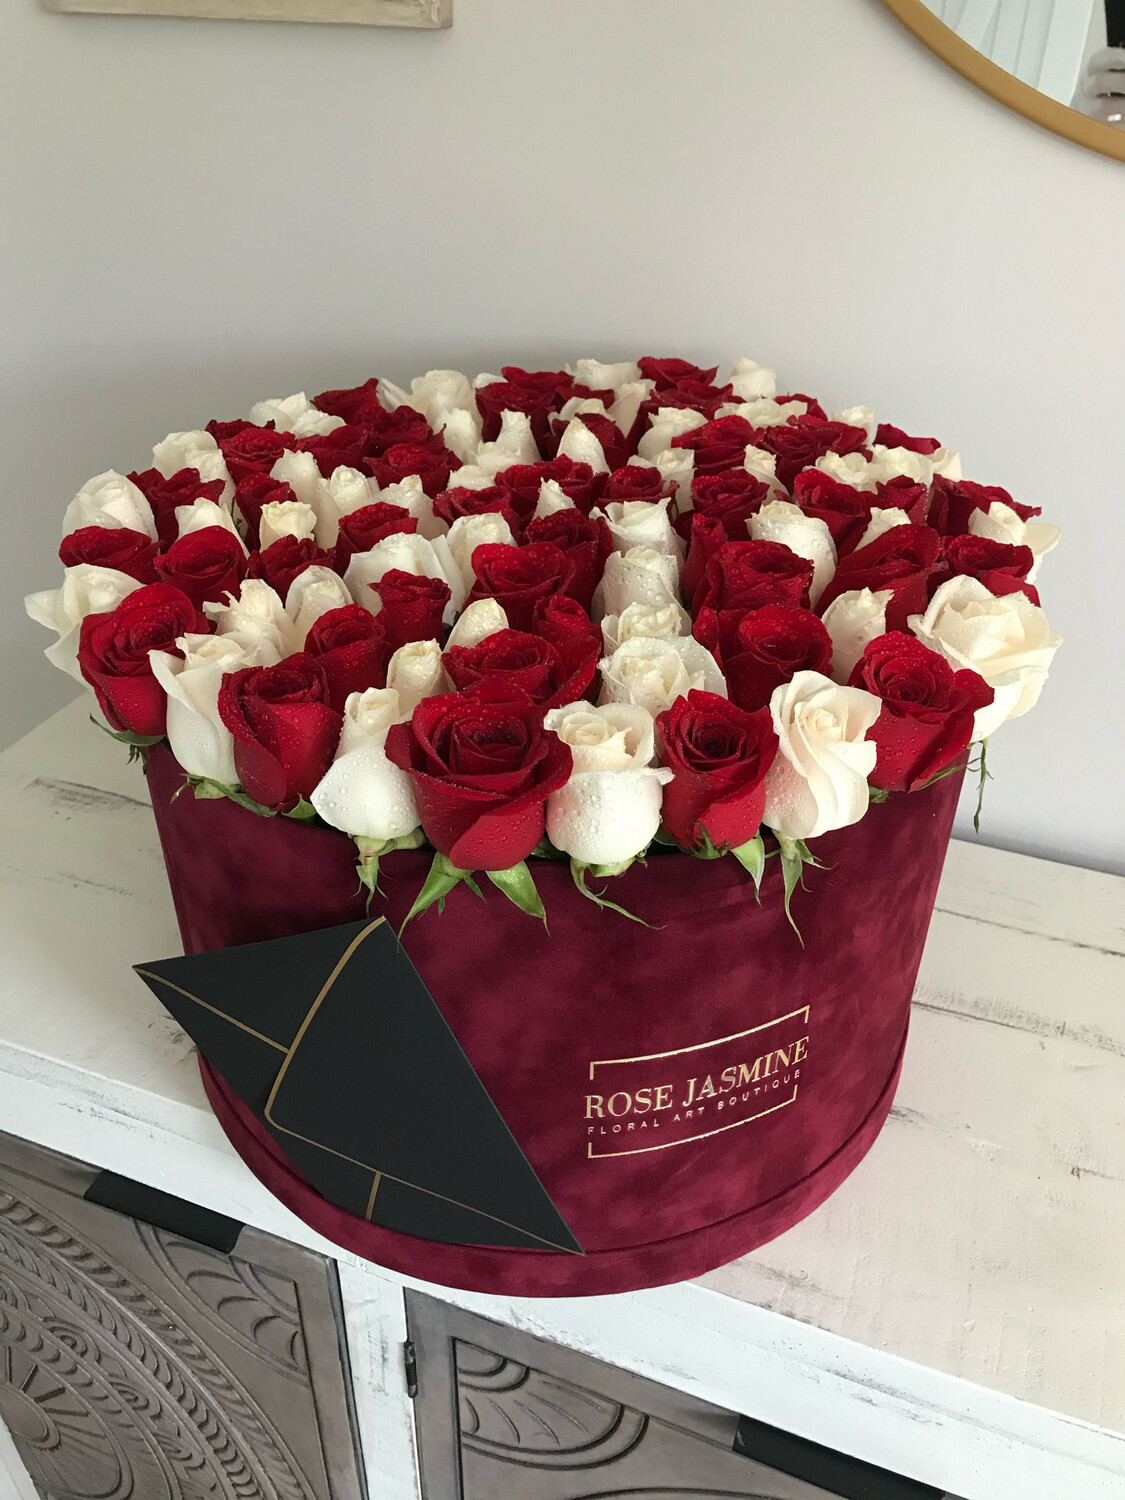 Rose Jasmine Signature – Rose Jasmine – Florist. Flower Store. Same Day  Flower Delivery. Voted Best of Atlanta by The Atlantan Magazine.